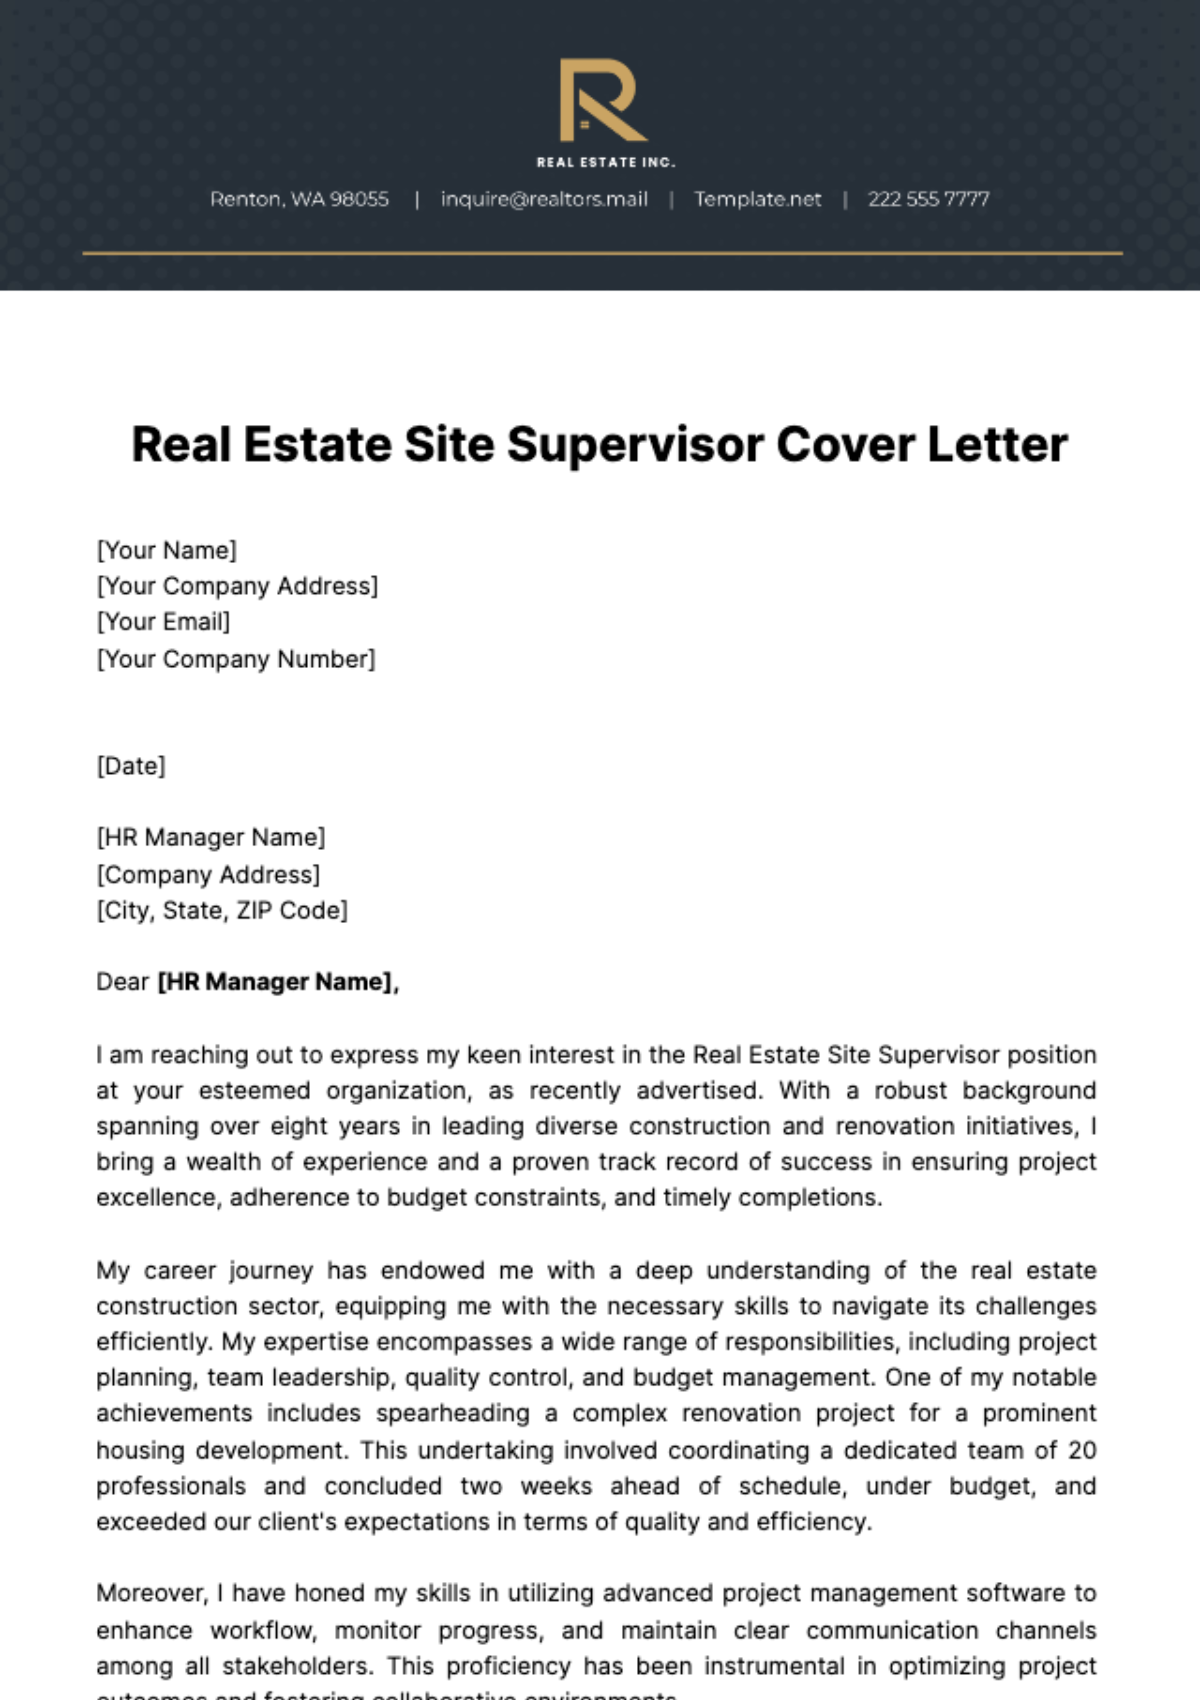 Real Estate Site Supervisor Cover Letter Template